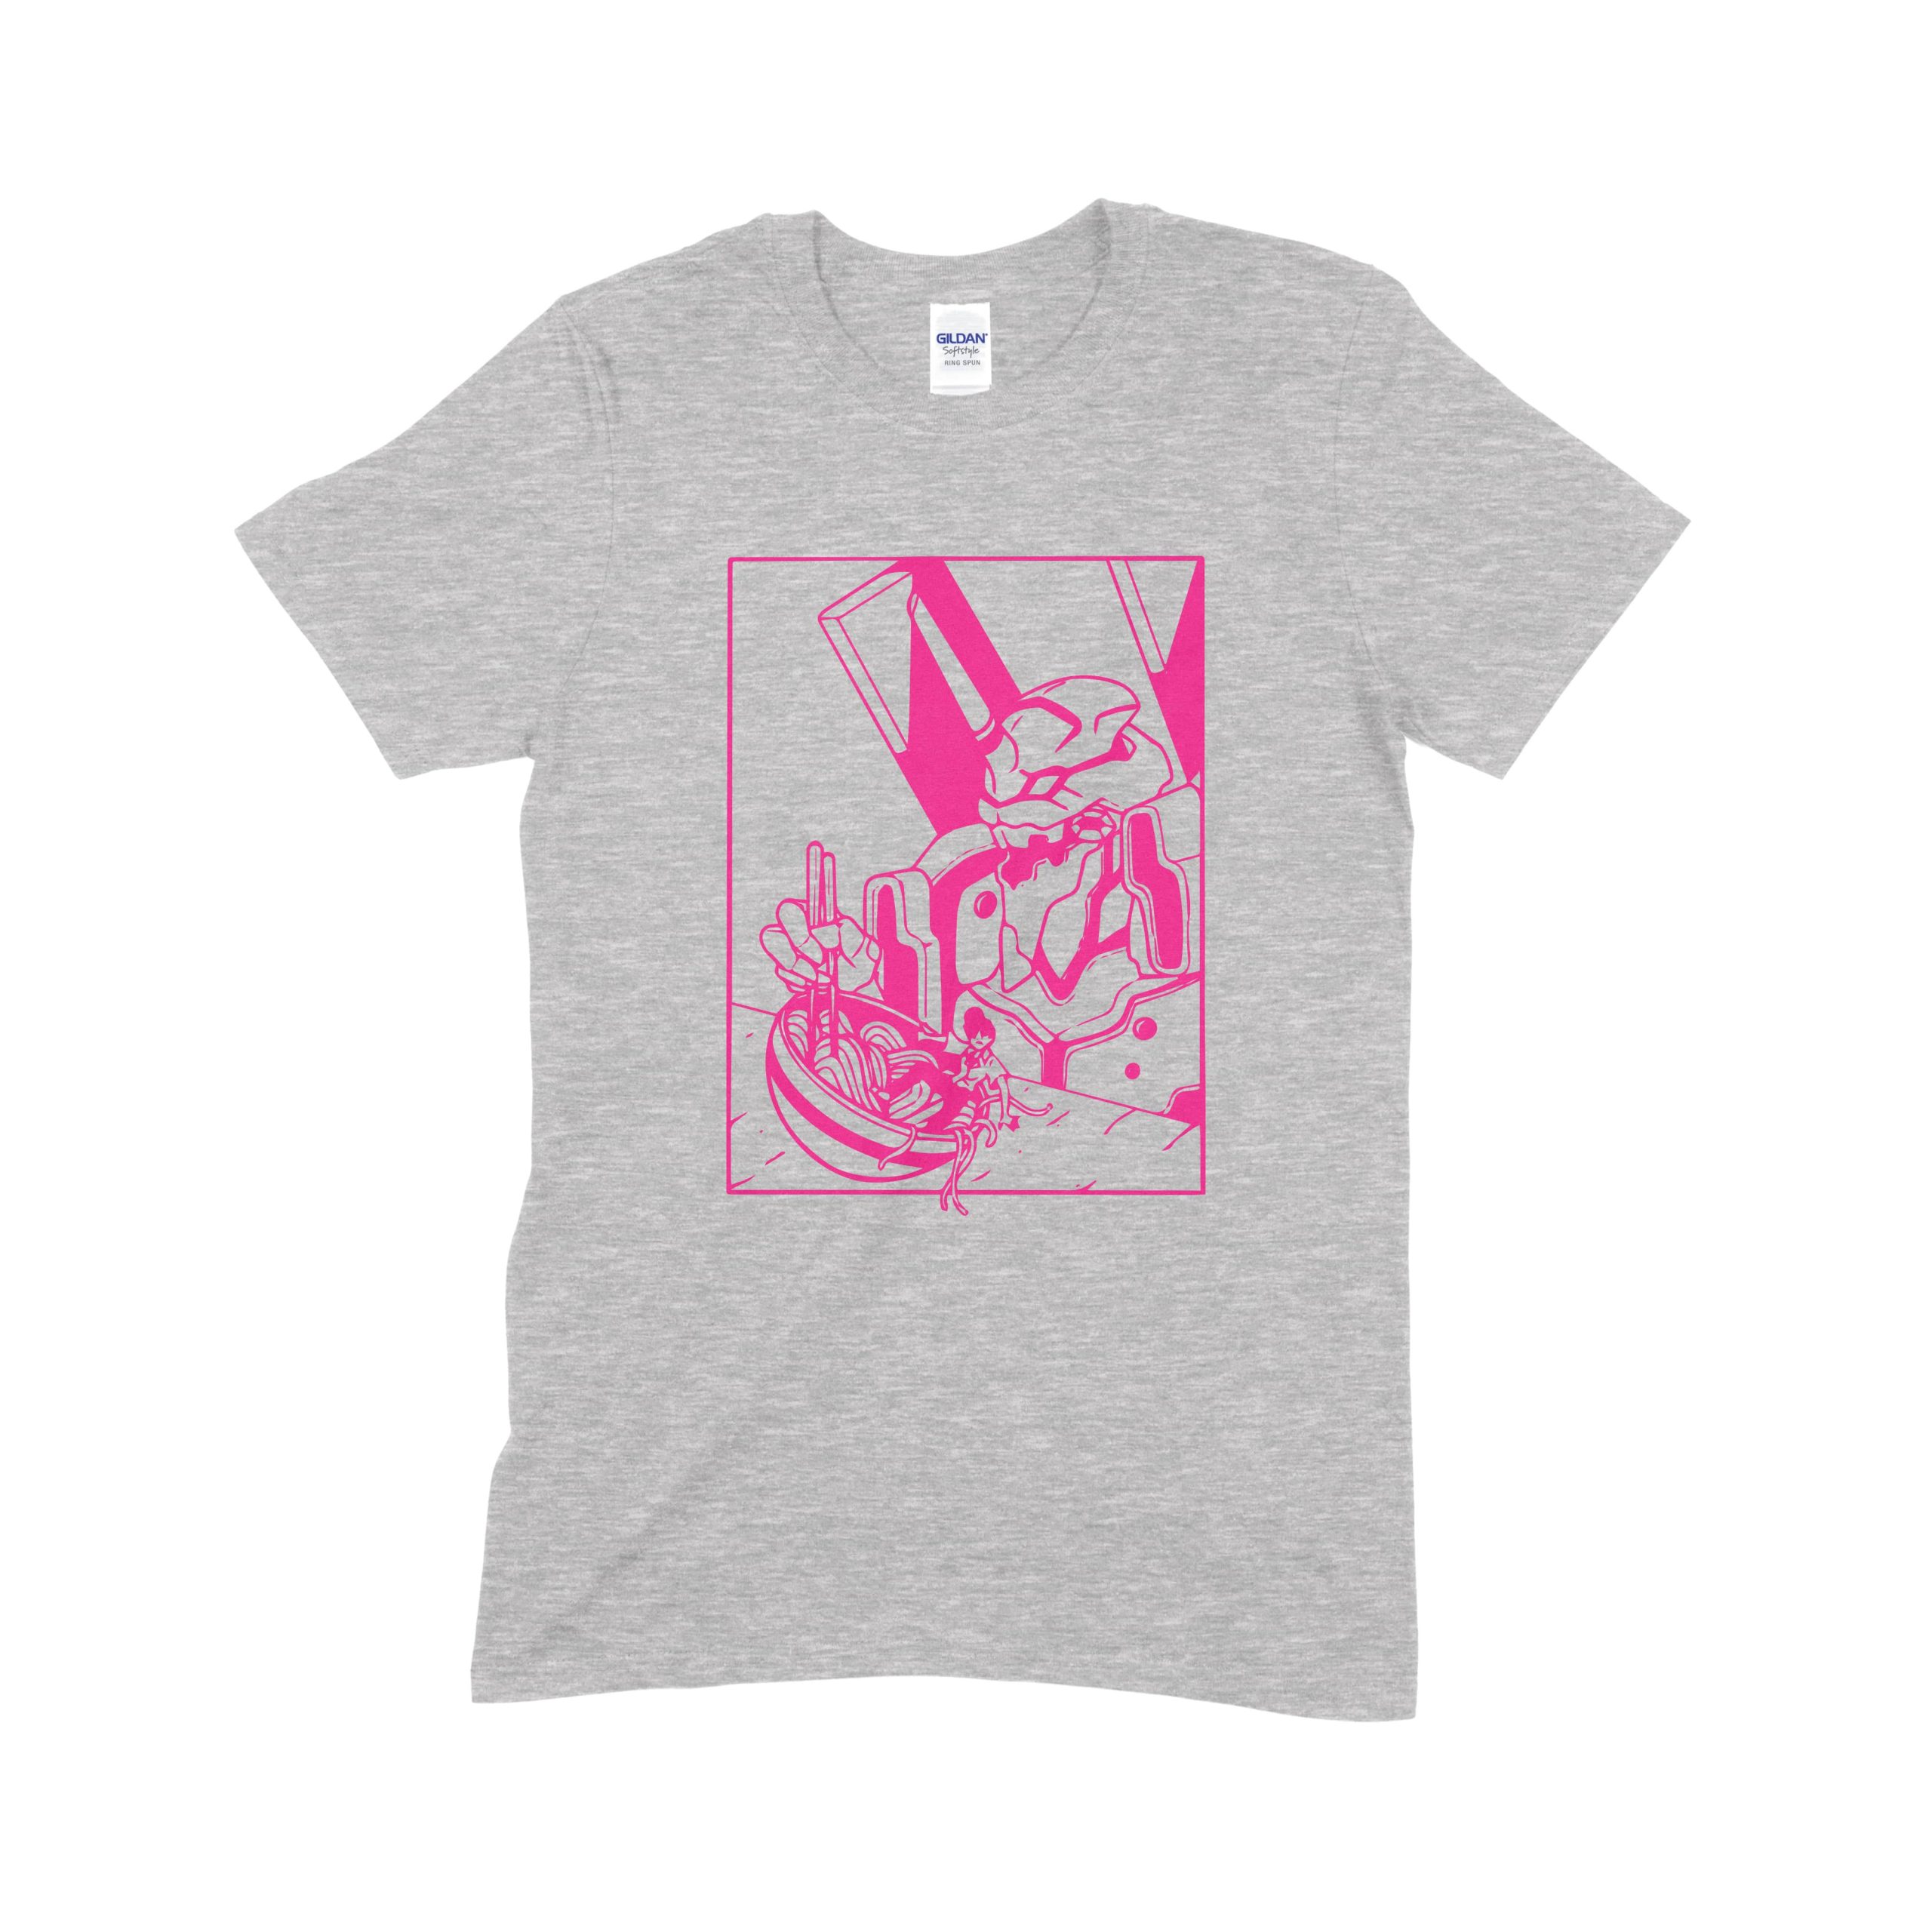 Get in The Ramen Shinji Neon Gen Eva Novelty T-Shirt